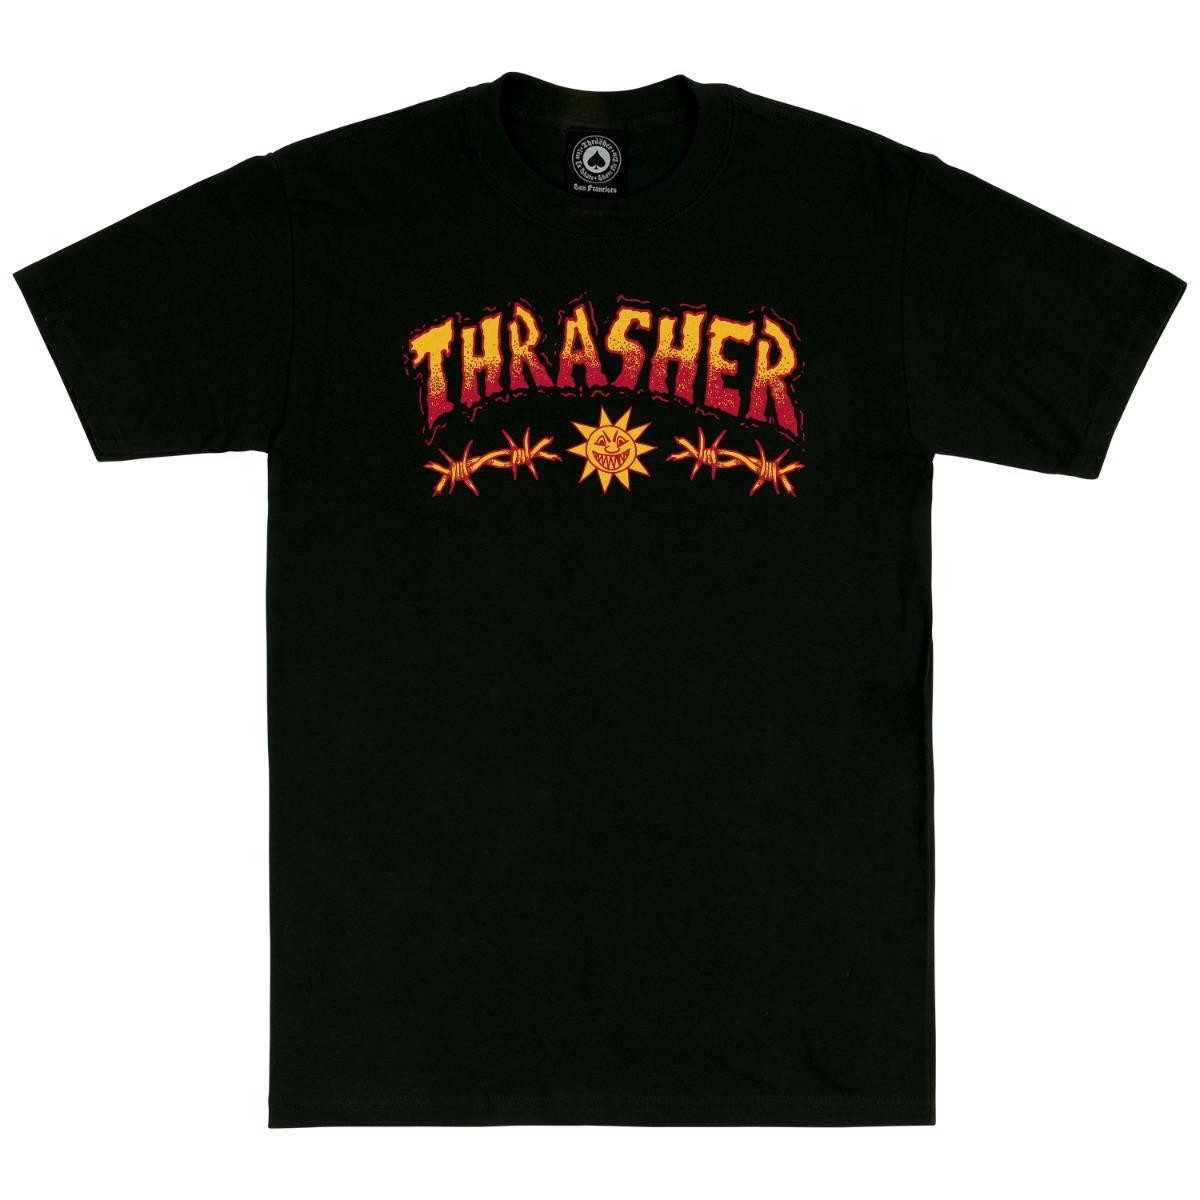 Thrasher Sketch T-Shirt Black